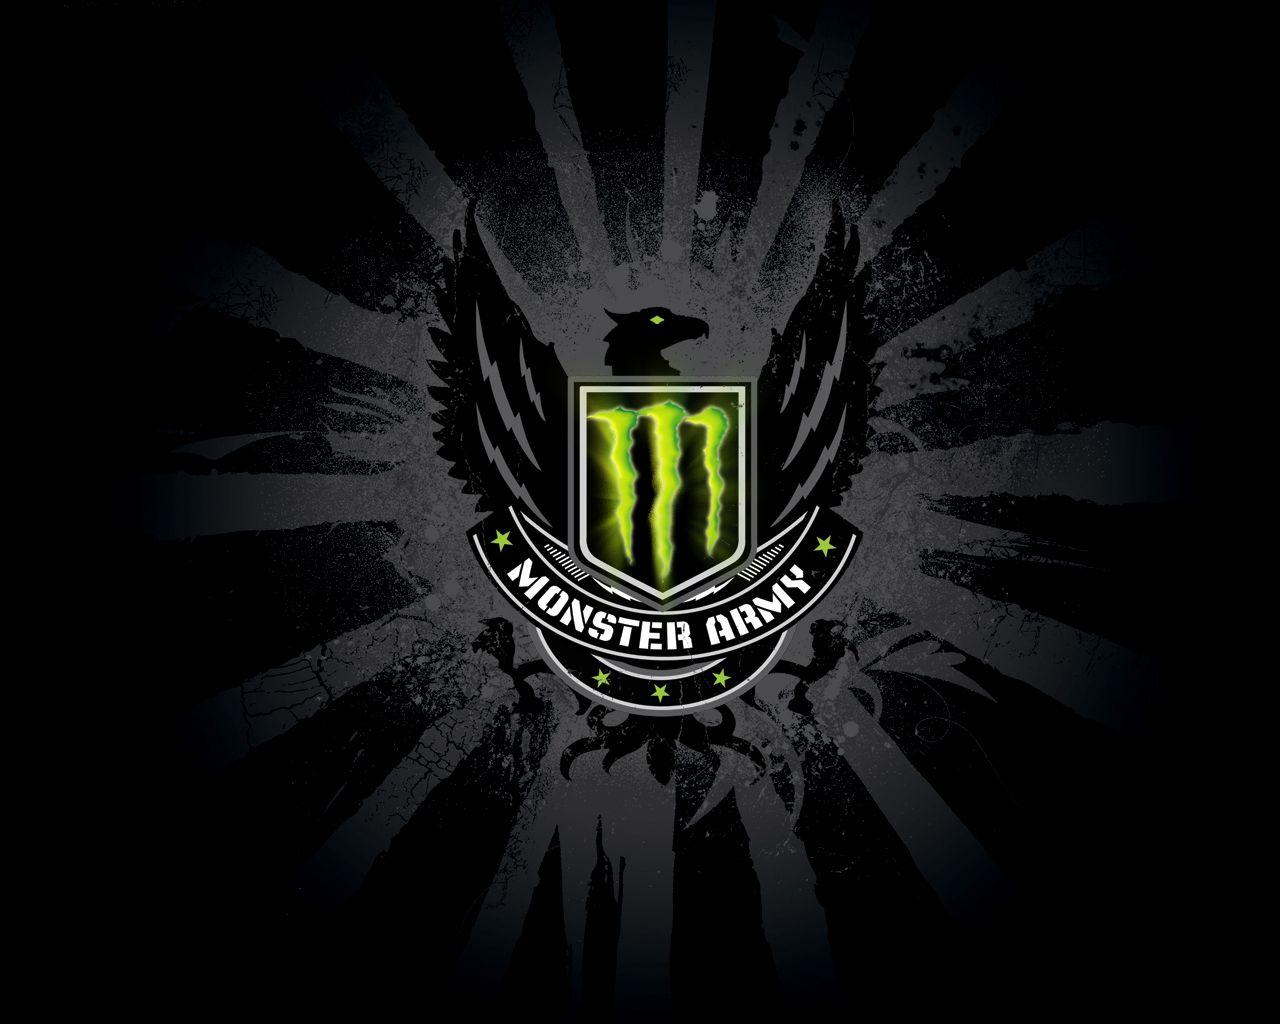 Download desktop wallpaper Monster Army logo with a black eagle